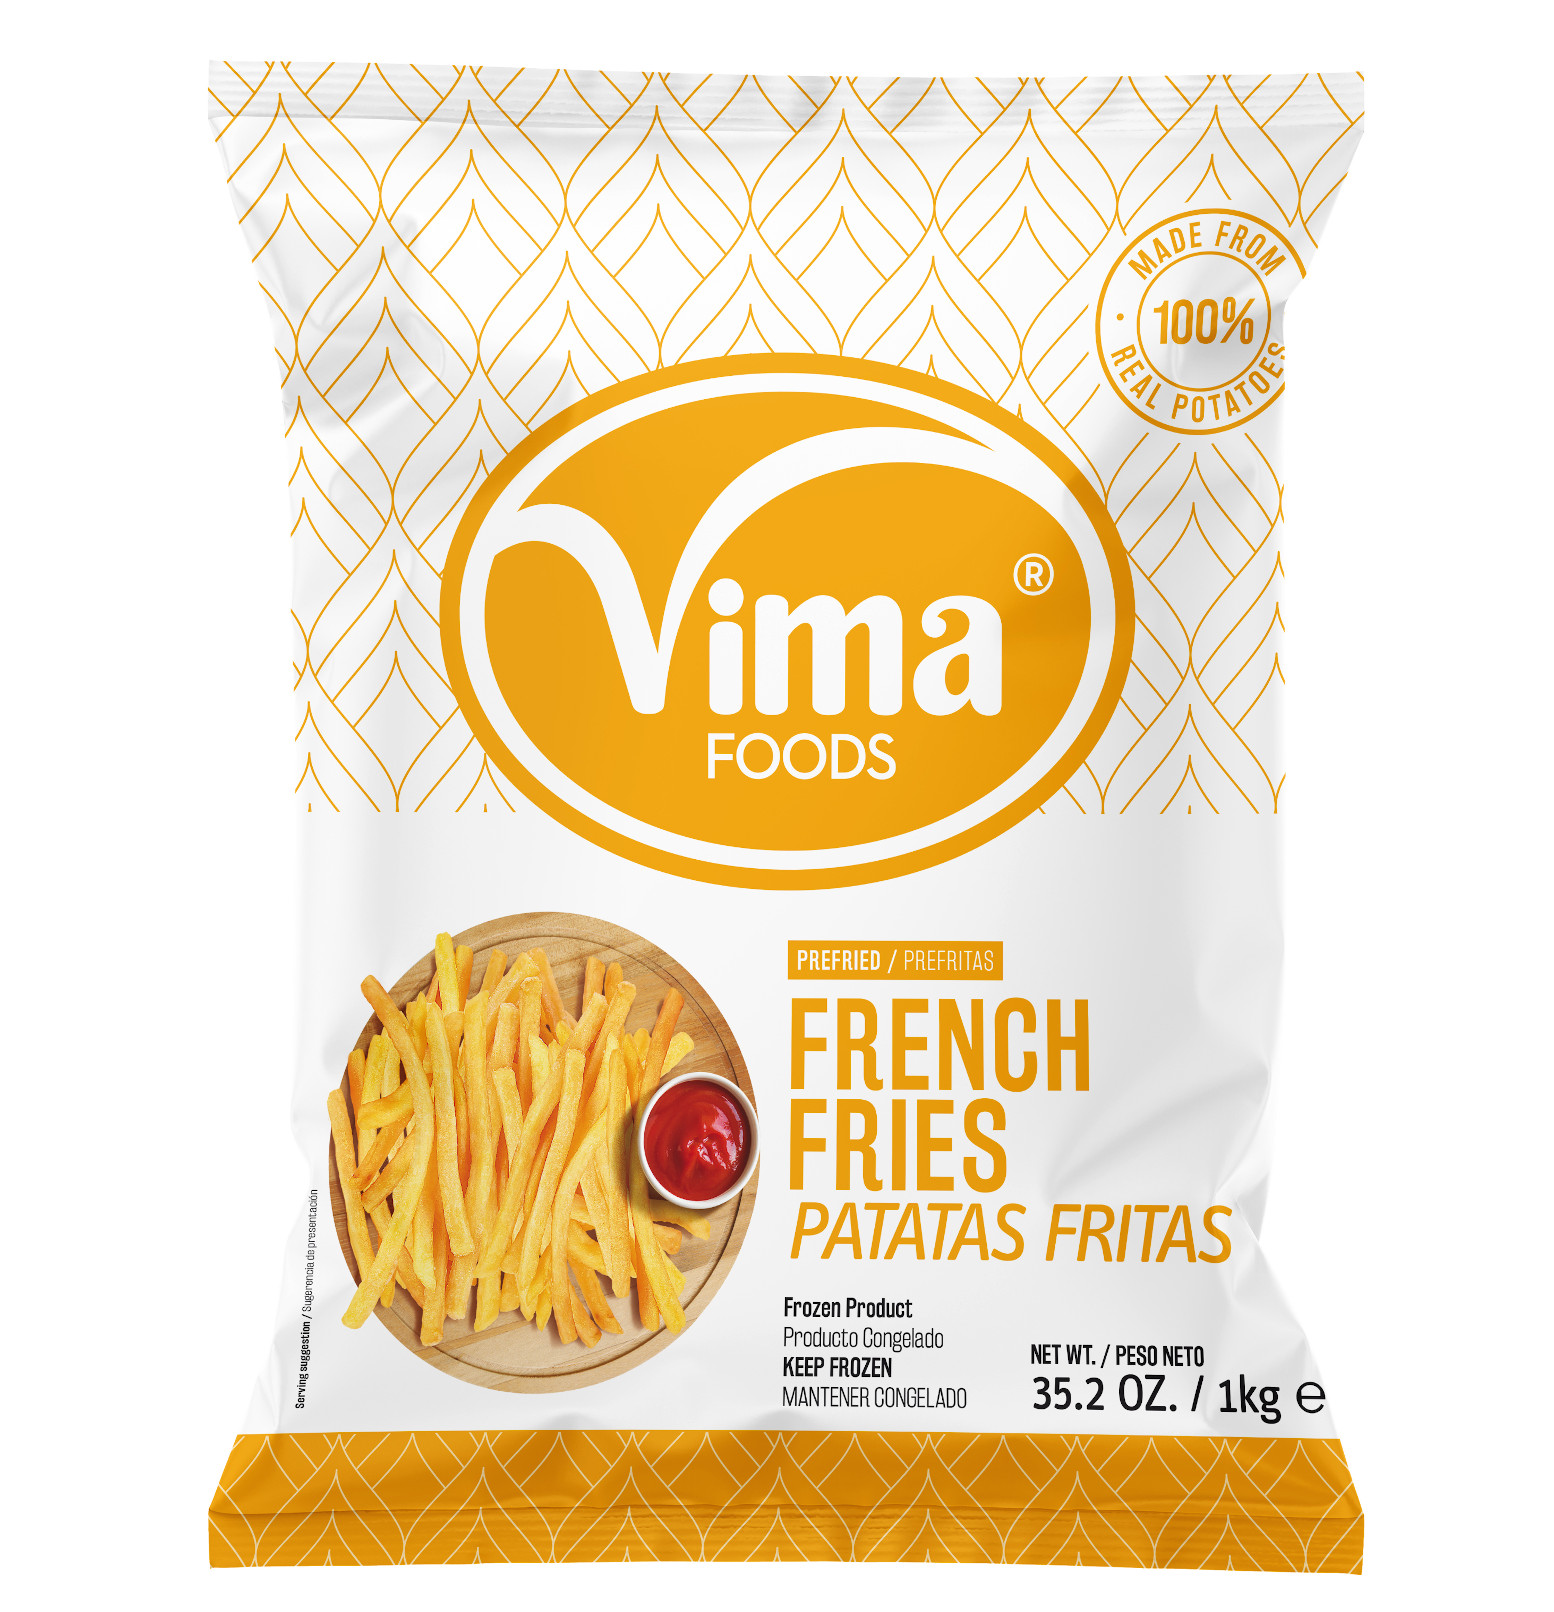 https://vimafoods.com/wp-content/uploads/2020/05/patata-frita-vima-1kg.jpg